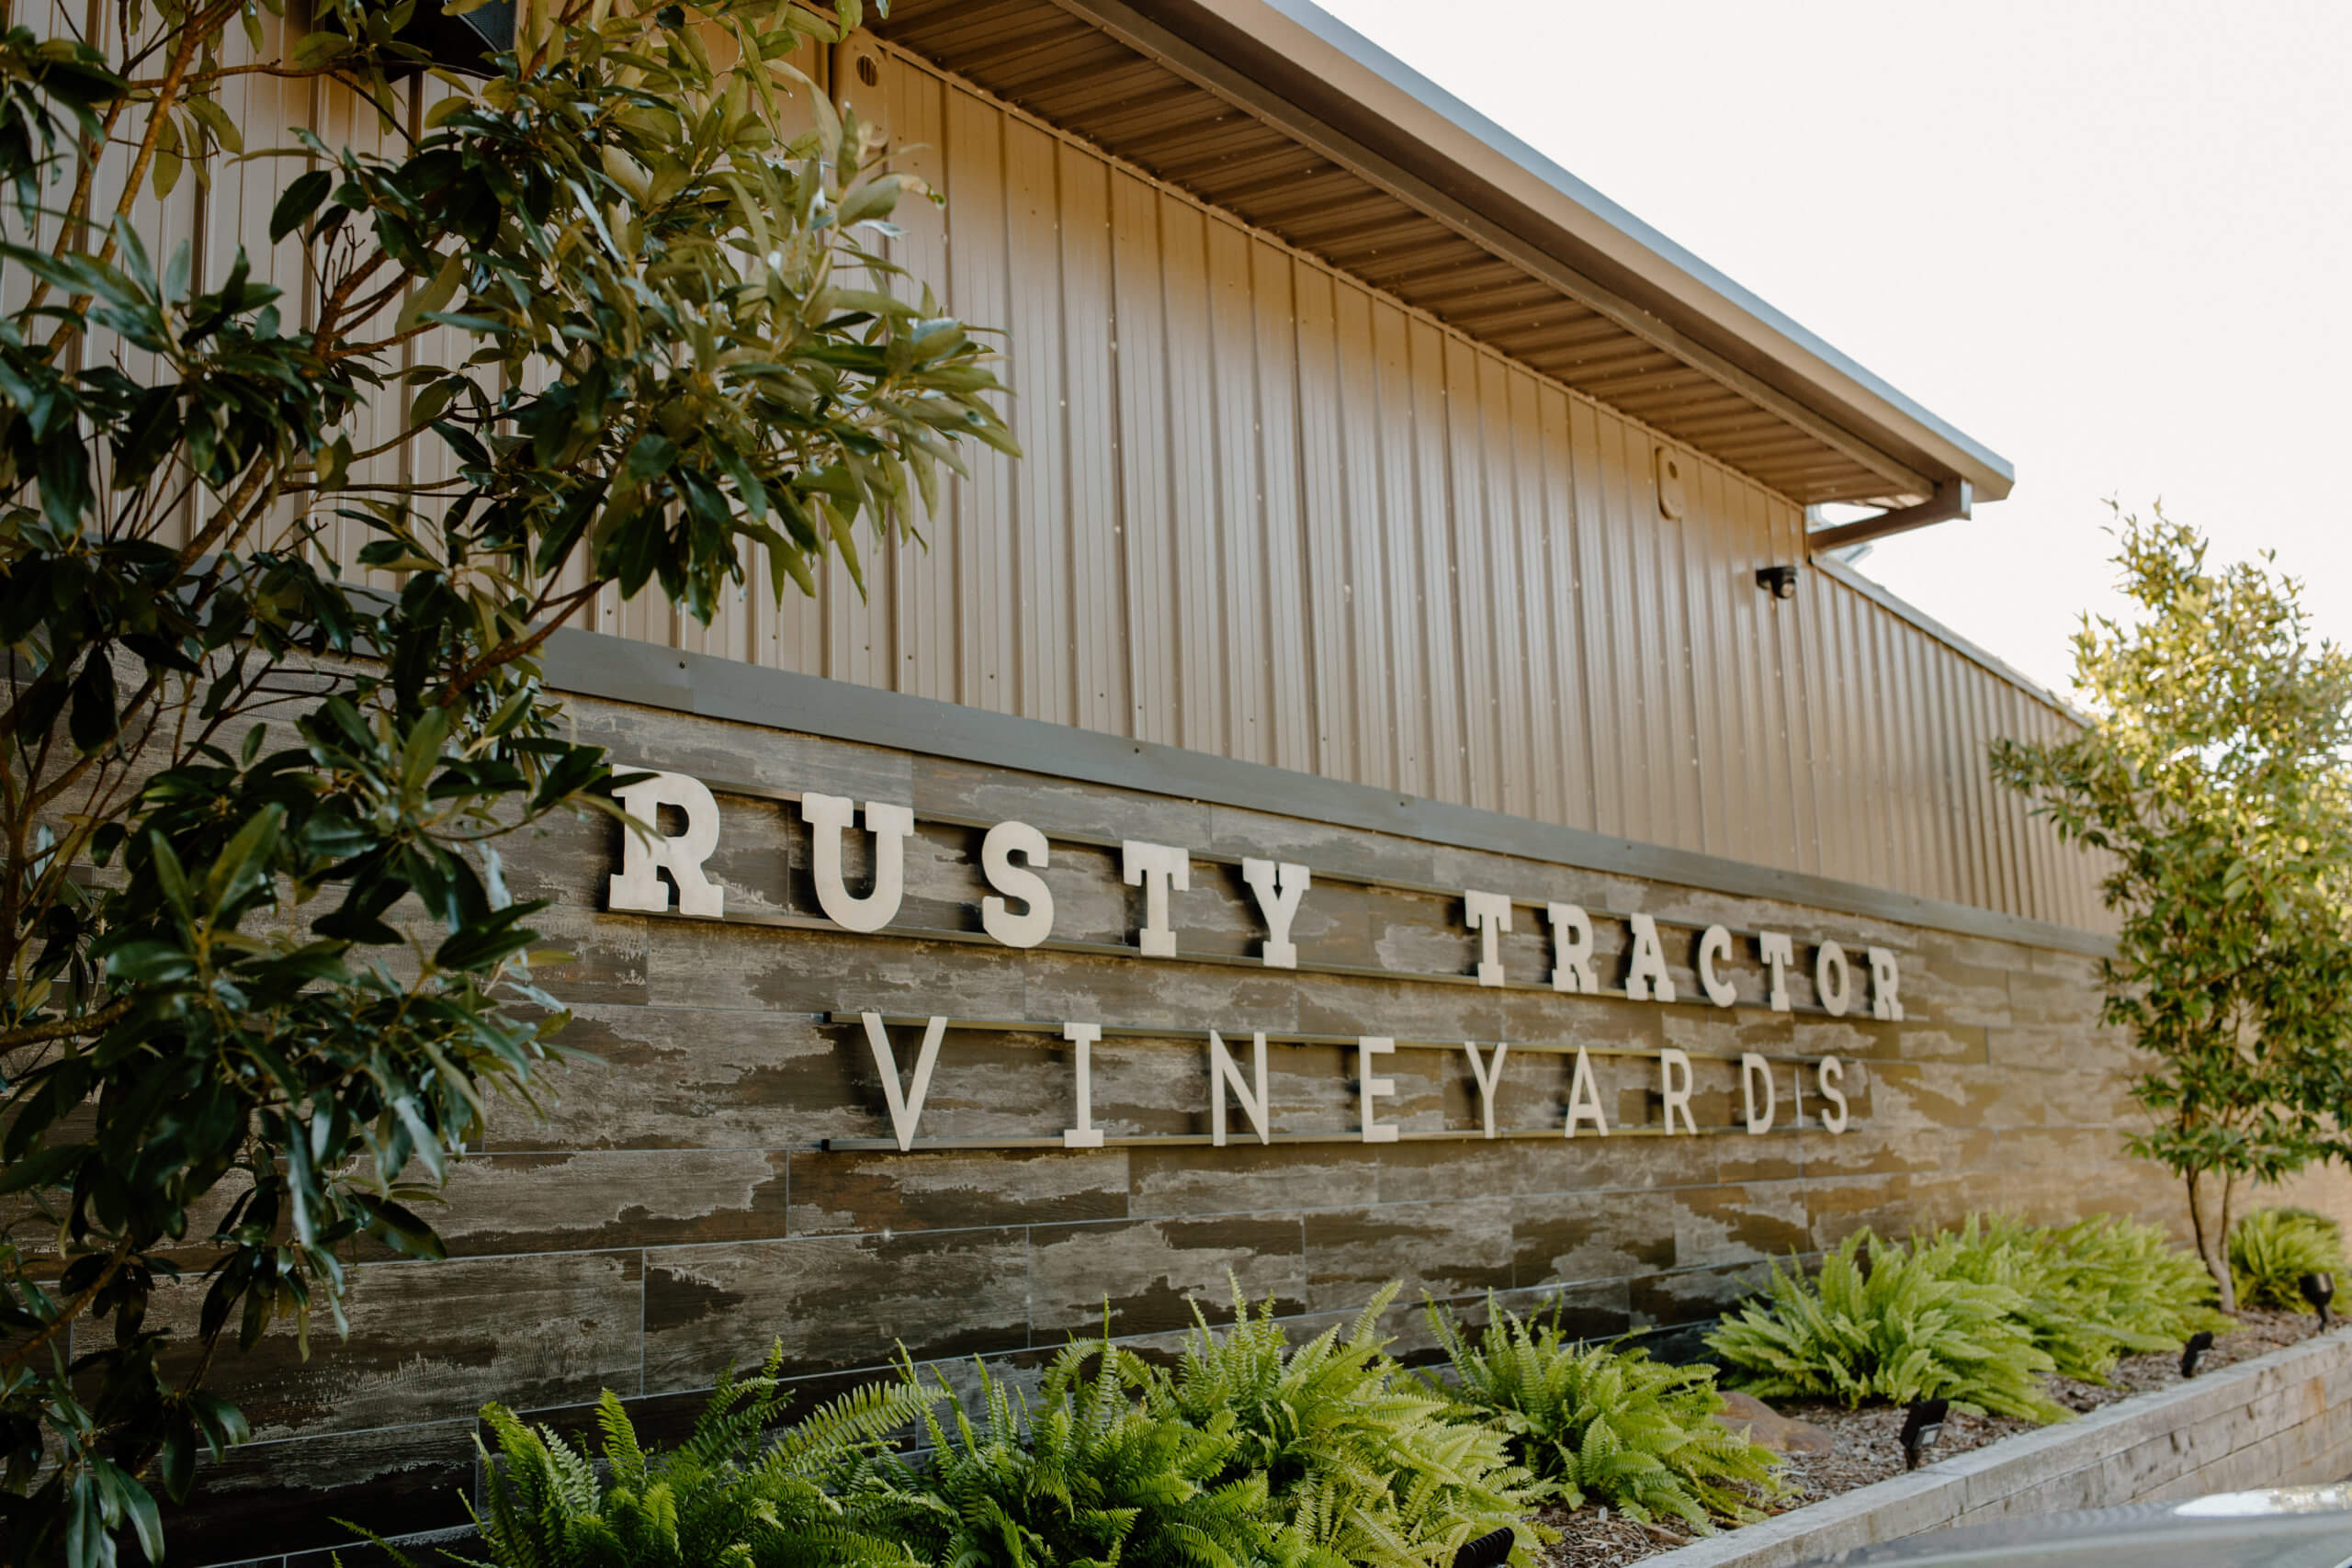 Rusty Tractor Vineyards in Little Rock